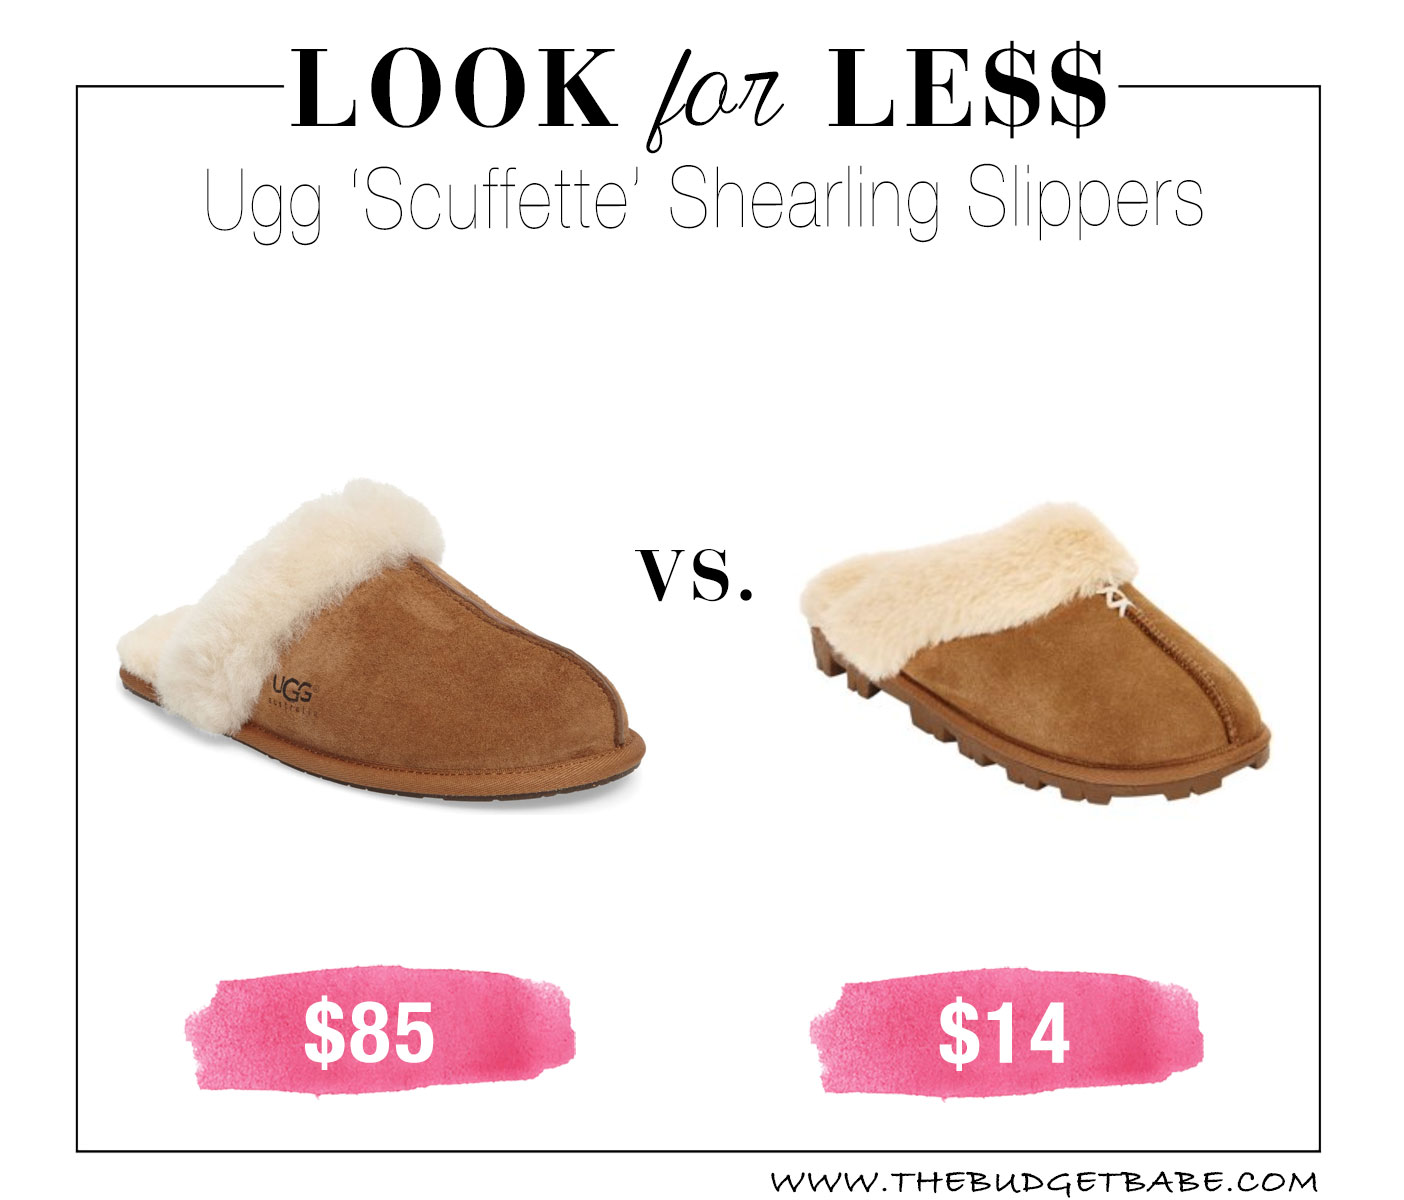 Ugg 'Scuffette' Shearling Slippers 